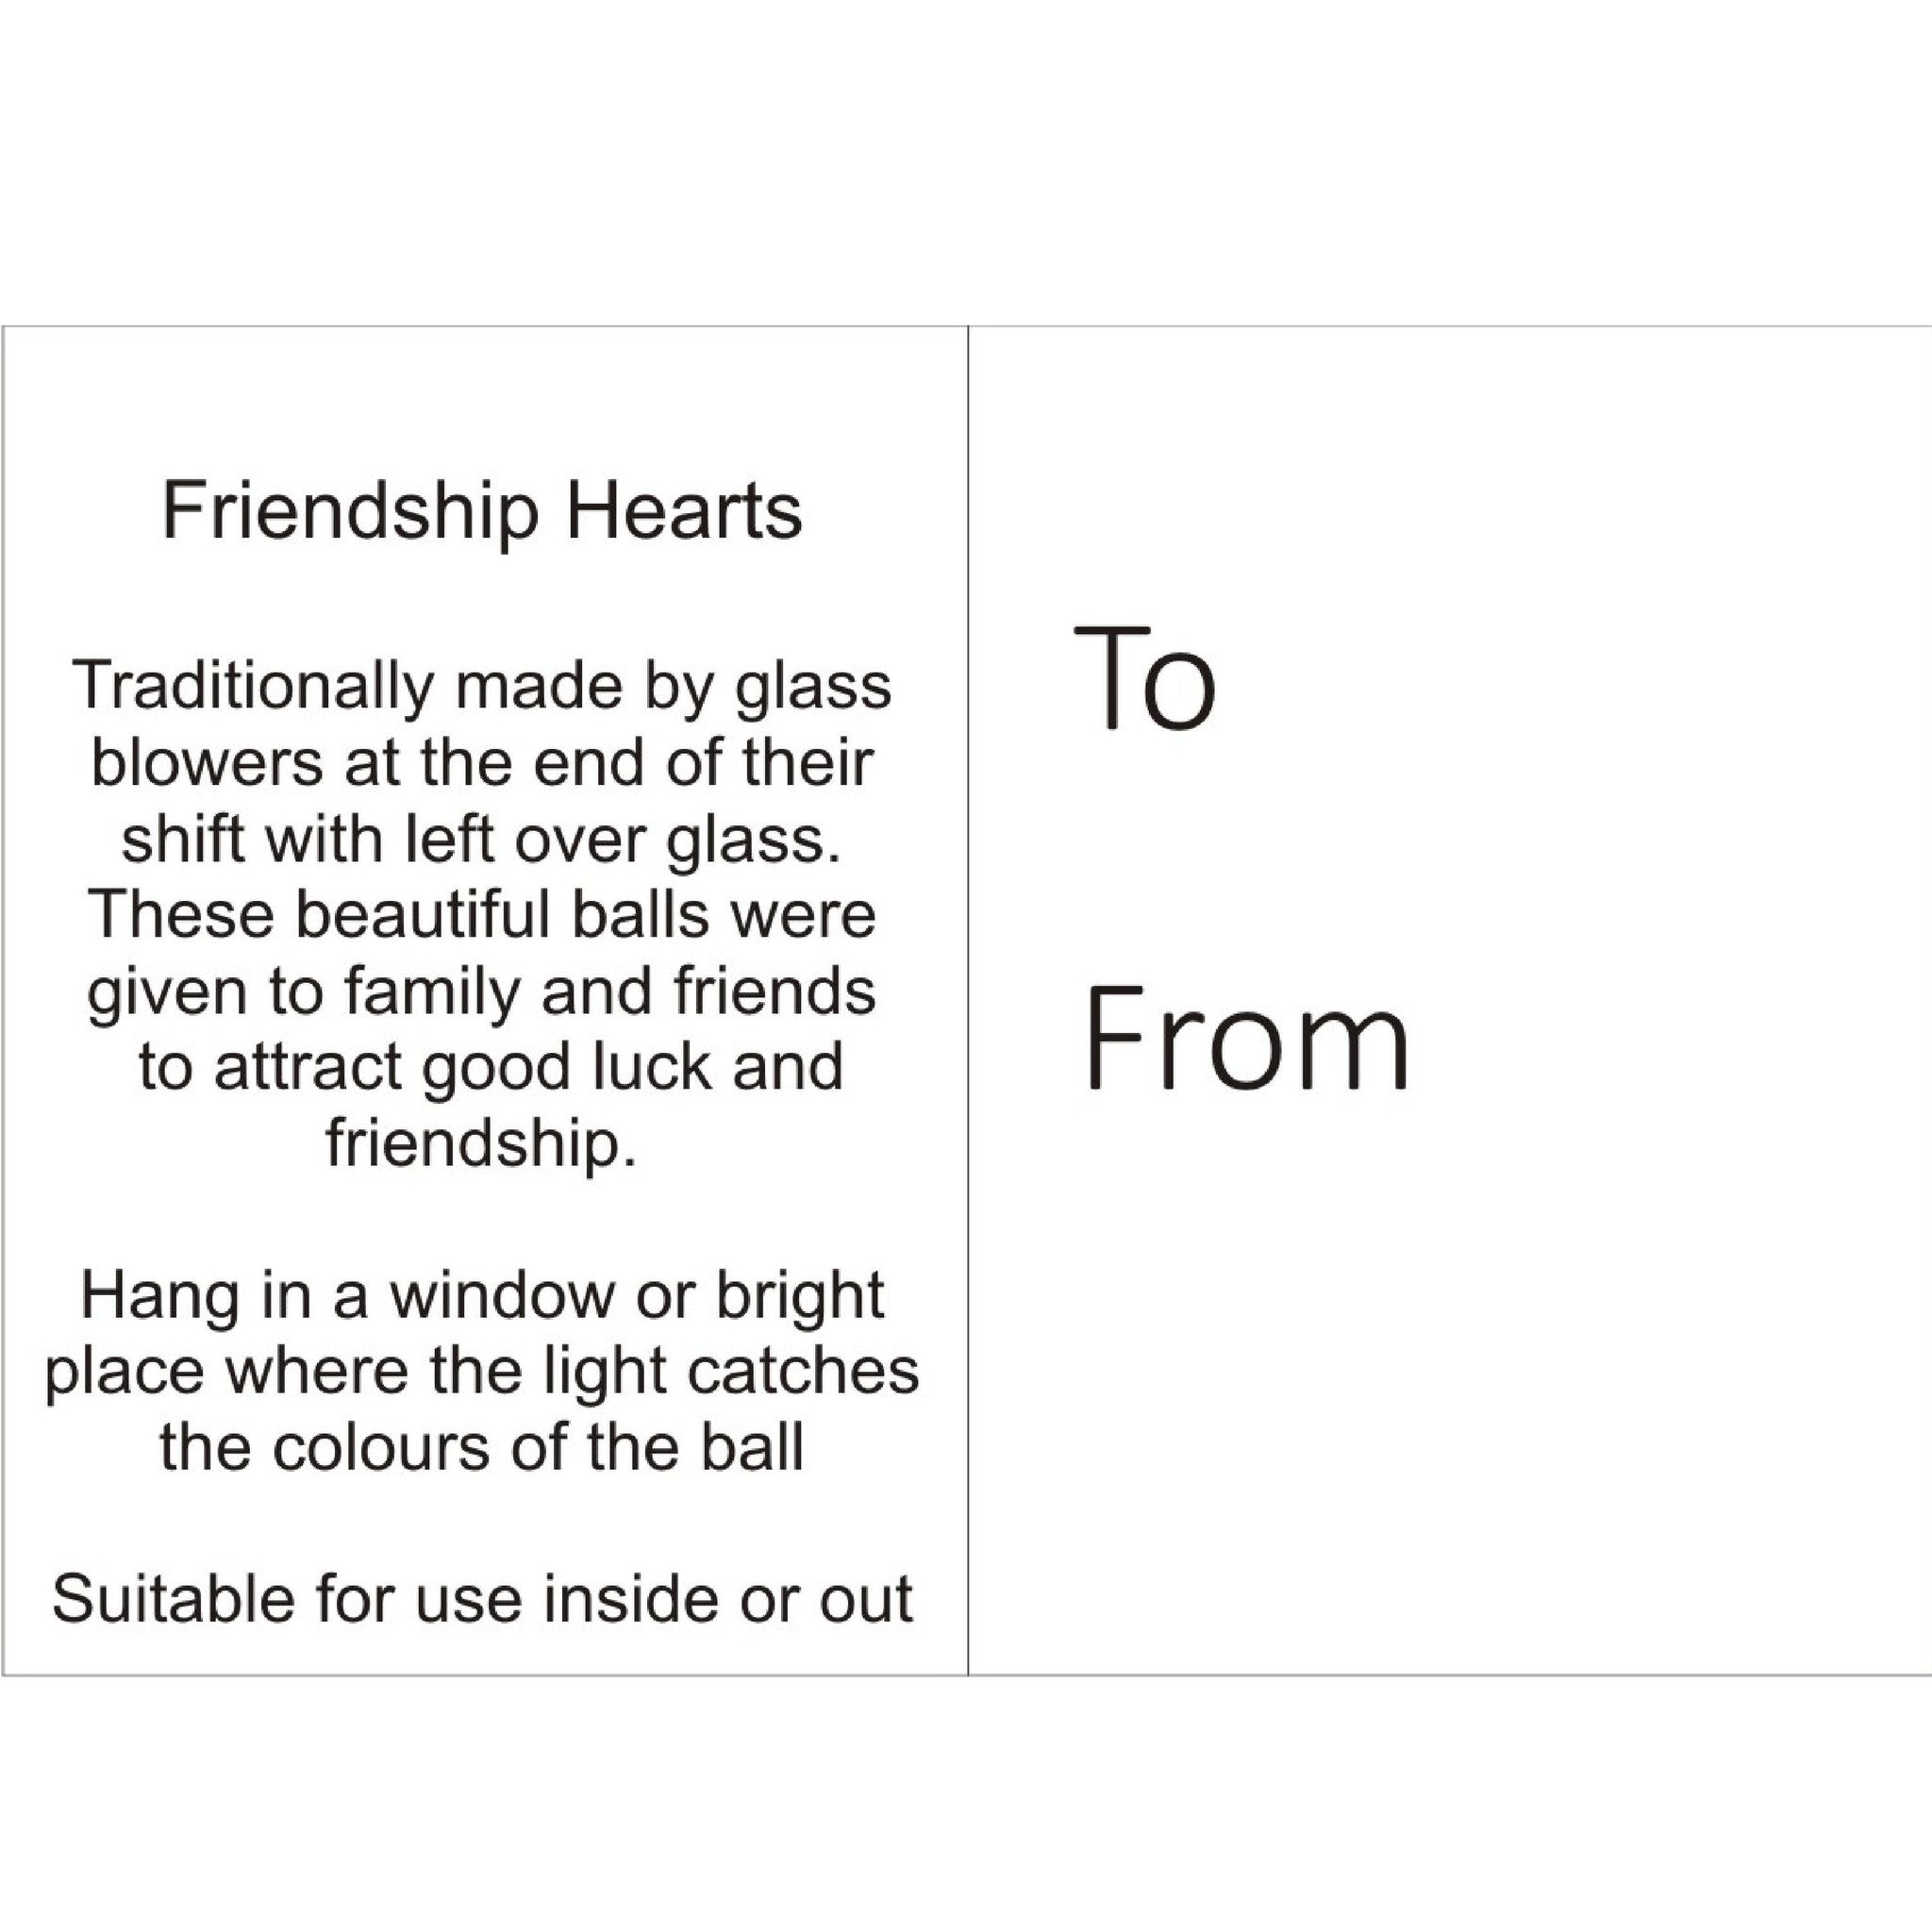 12cm Friendship Heart - Red - Aspire Art Glass